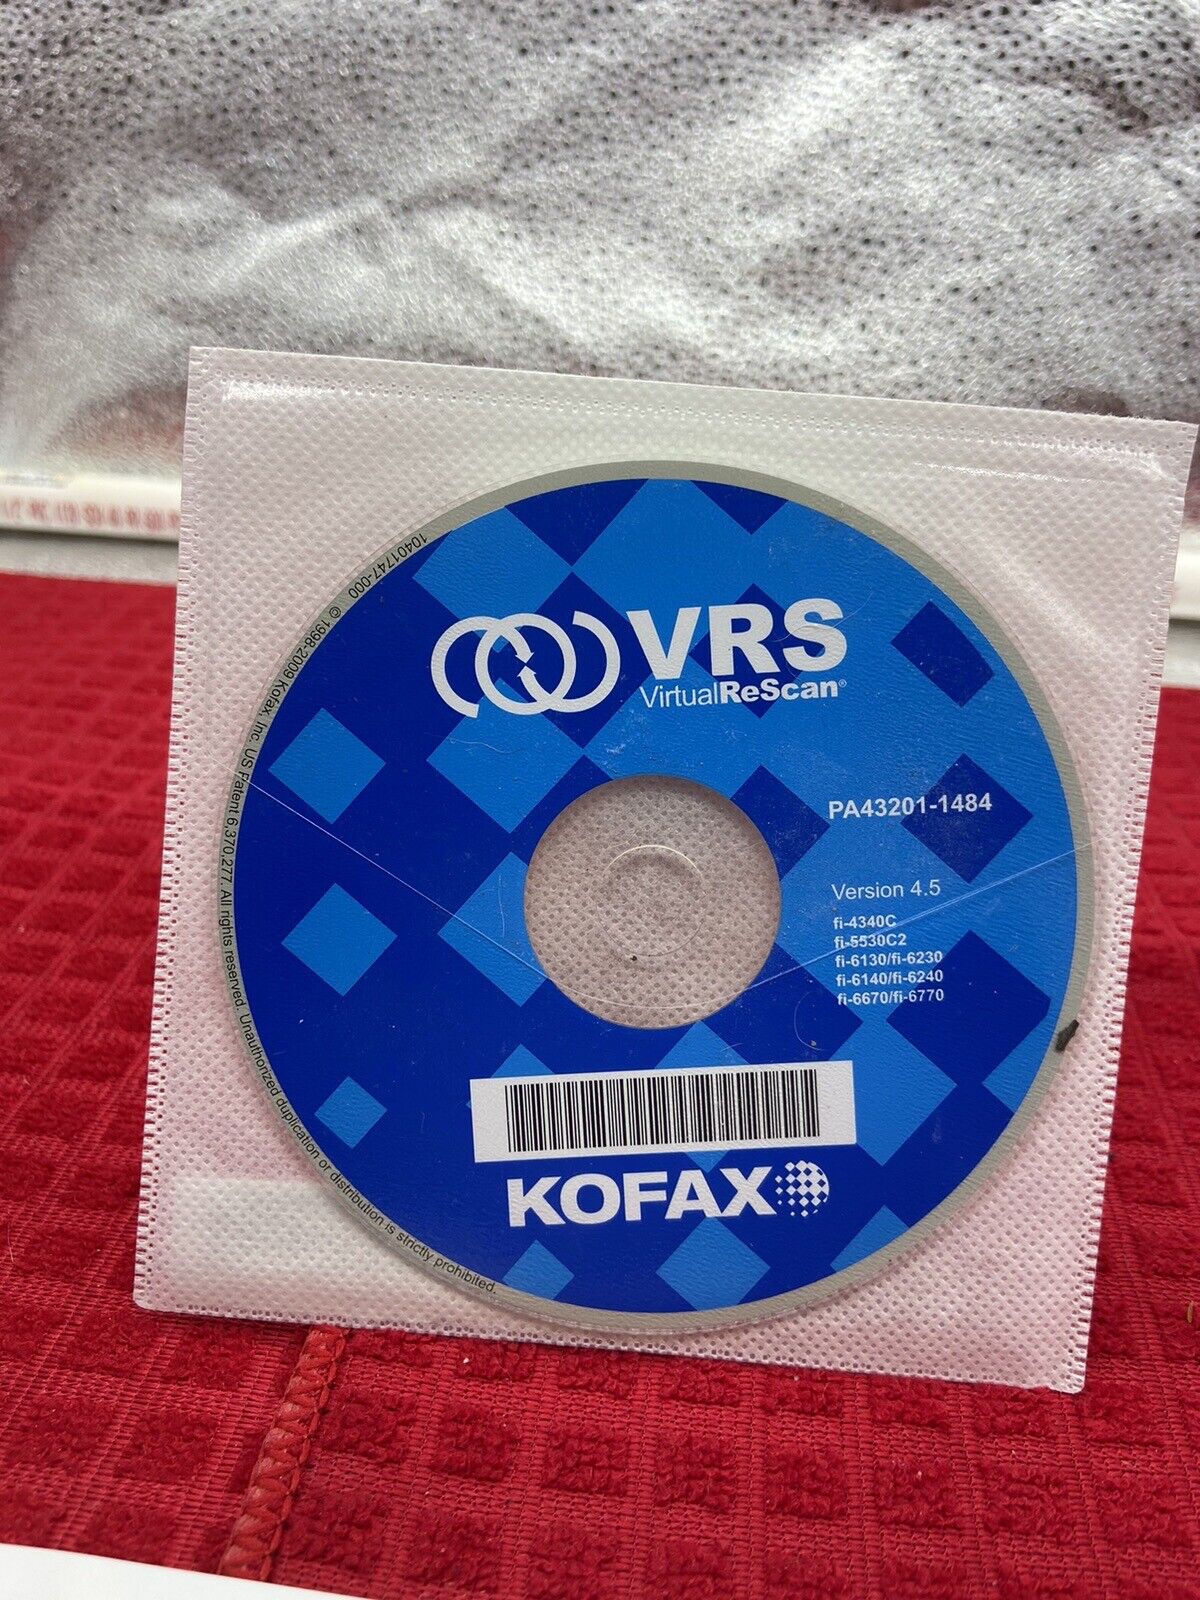 Kofax VRS Version 4.5 for Fujitsu Scanner - THE CD-ROM Installation Disc